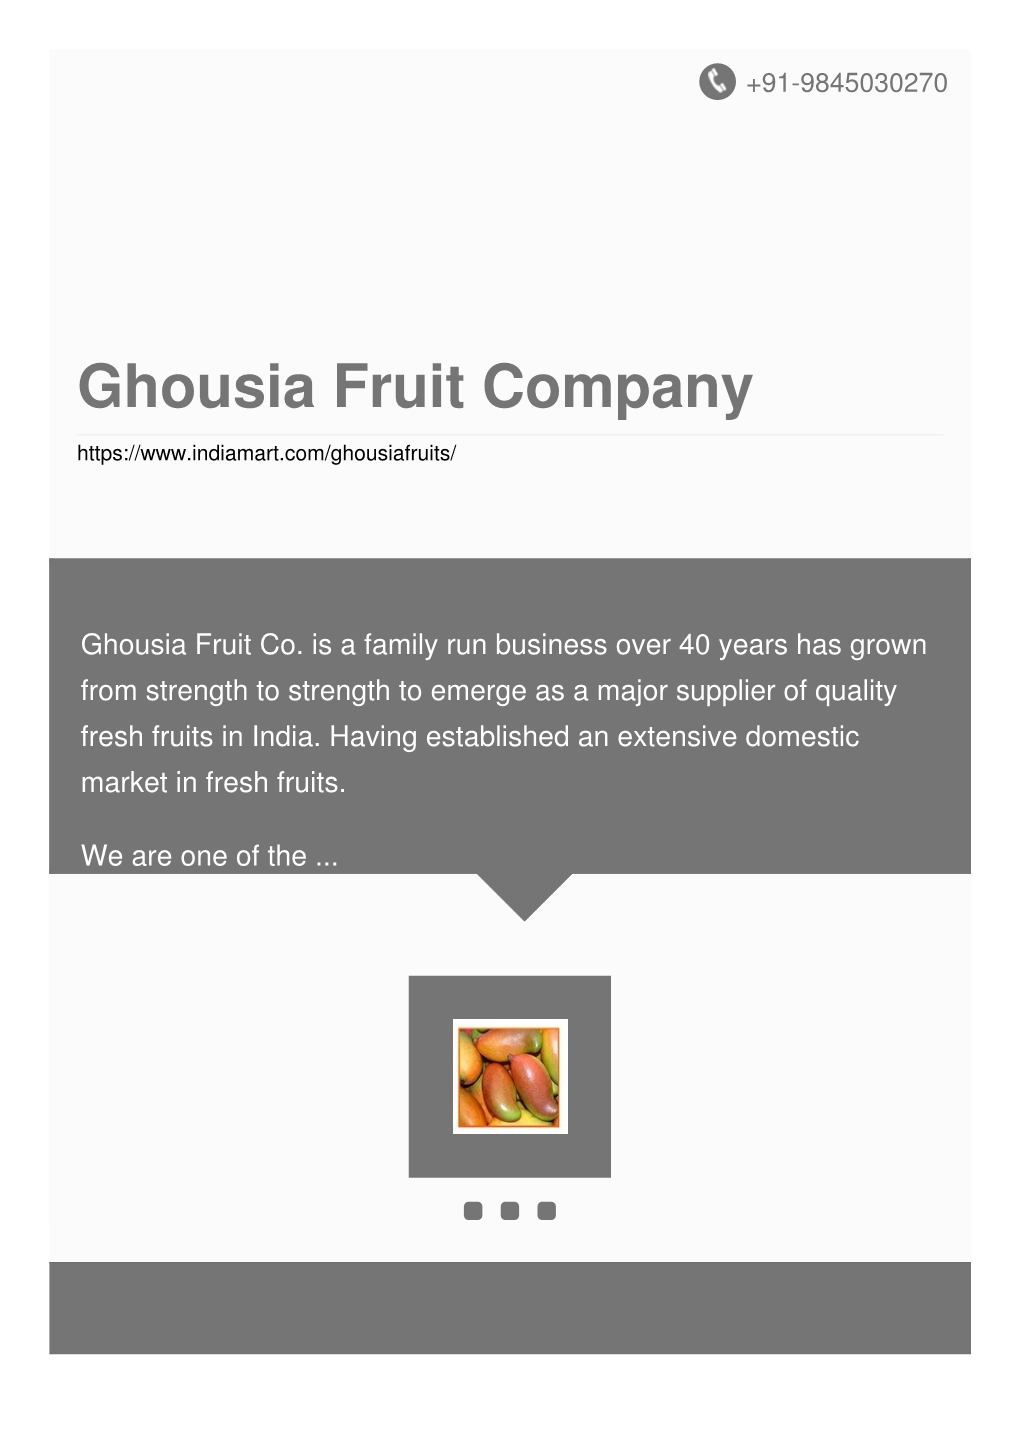 Ghousia Fruit Company